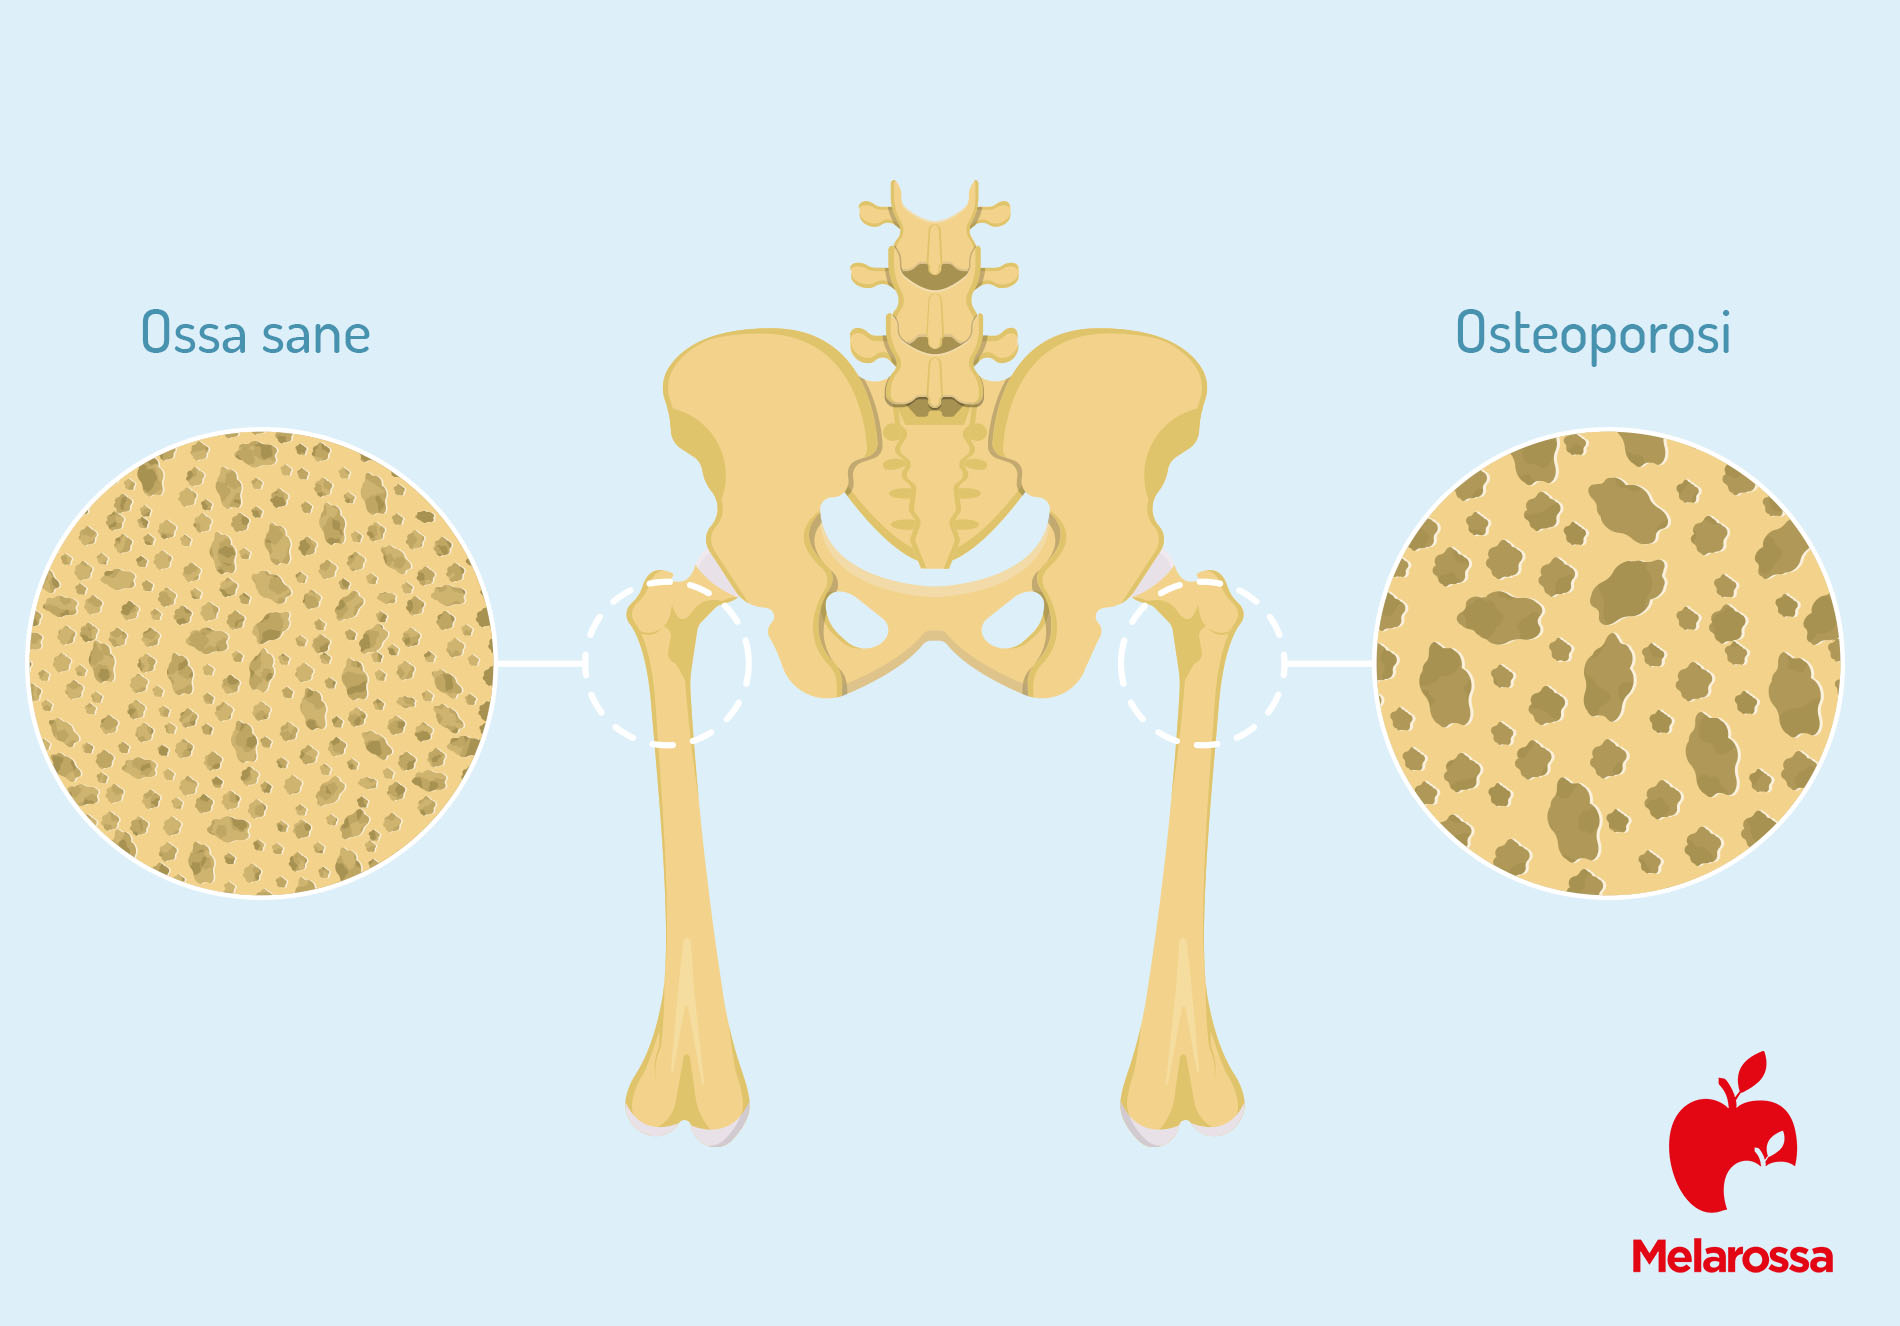 osteoporosi: ossa